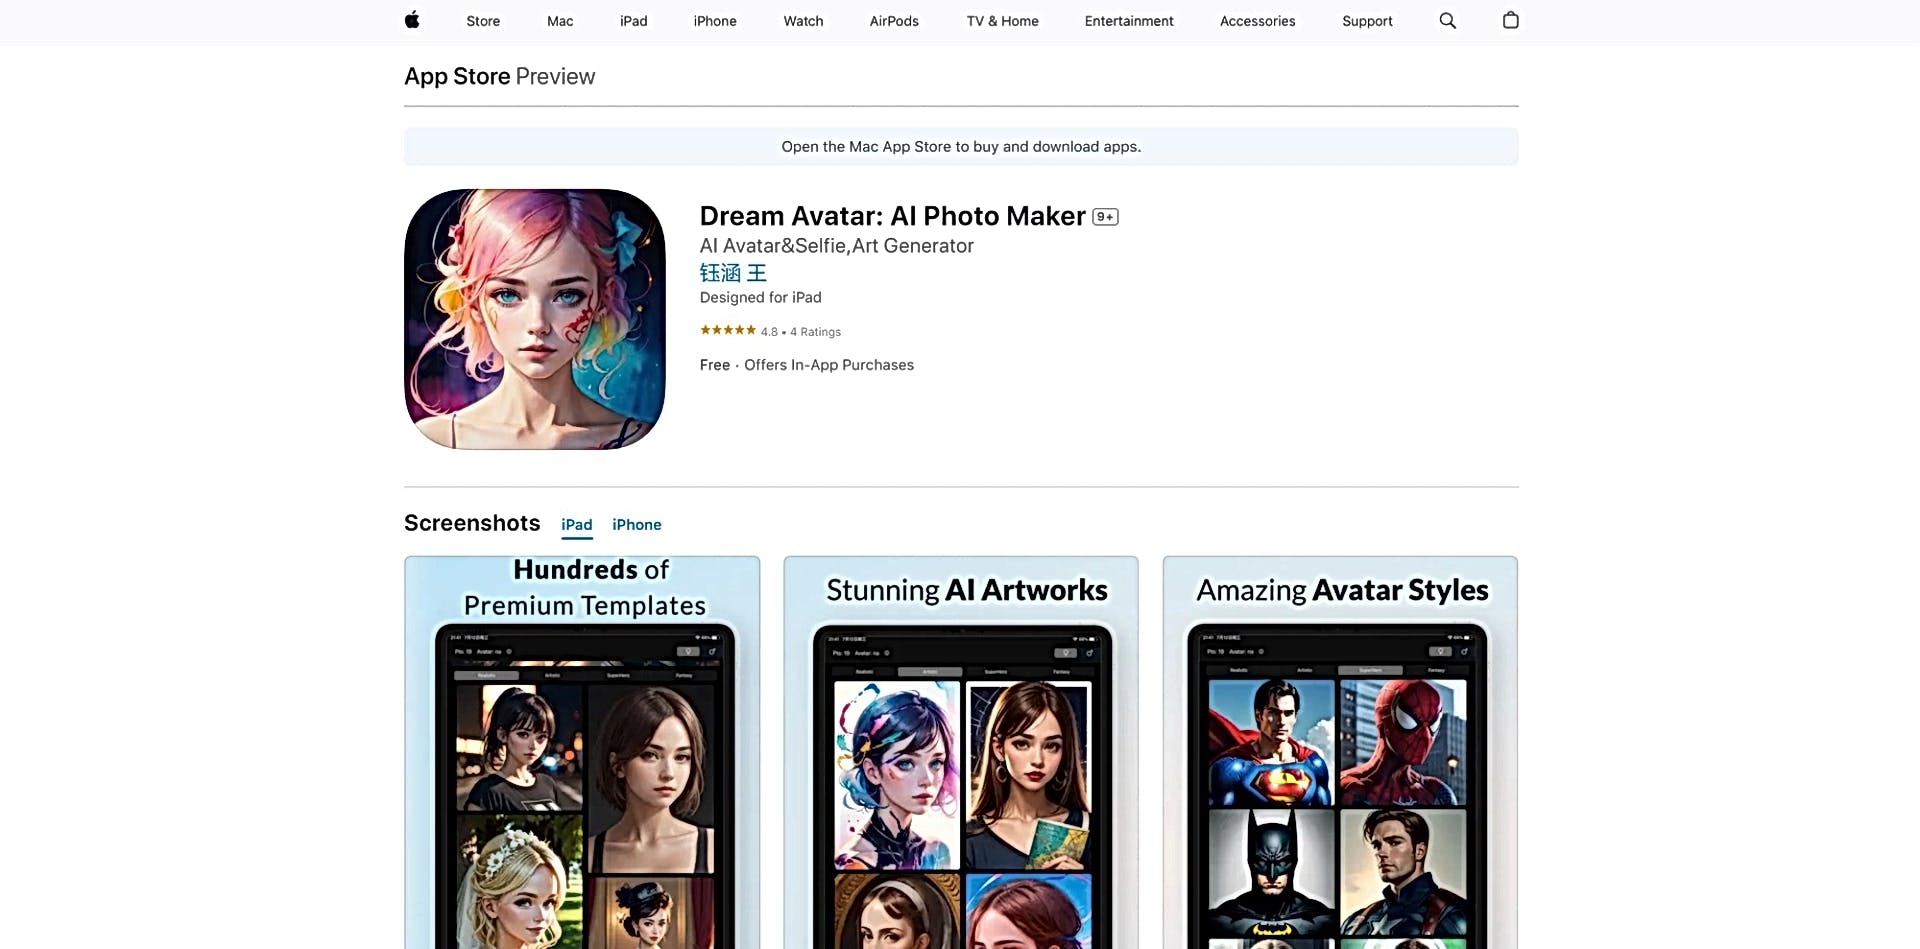 Dream Avatar featured